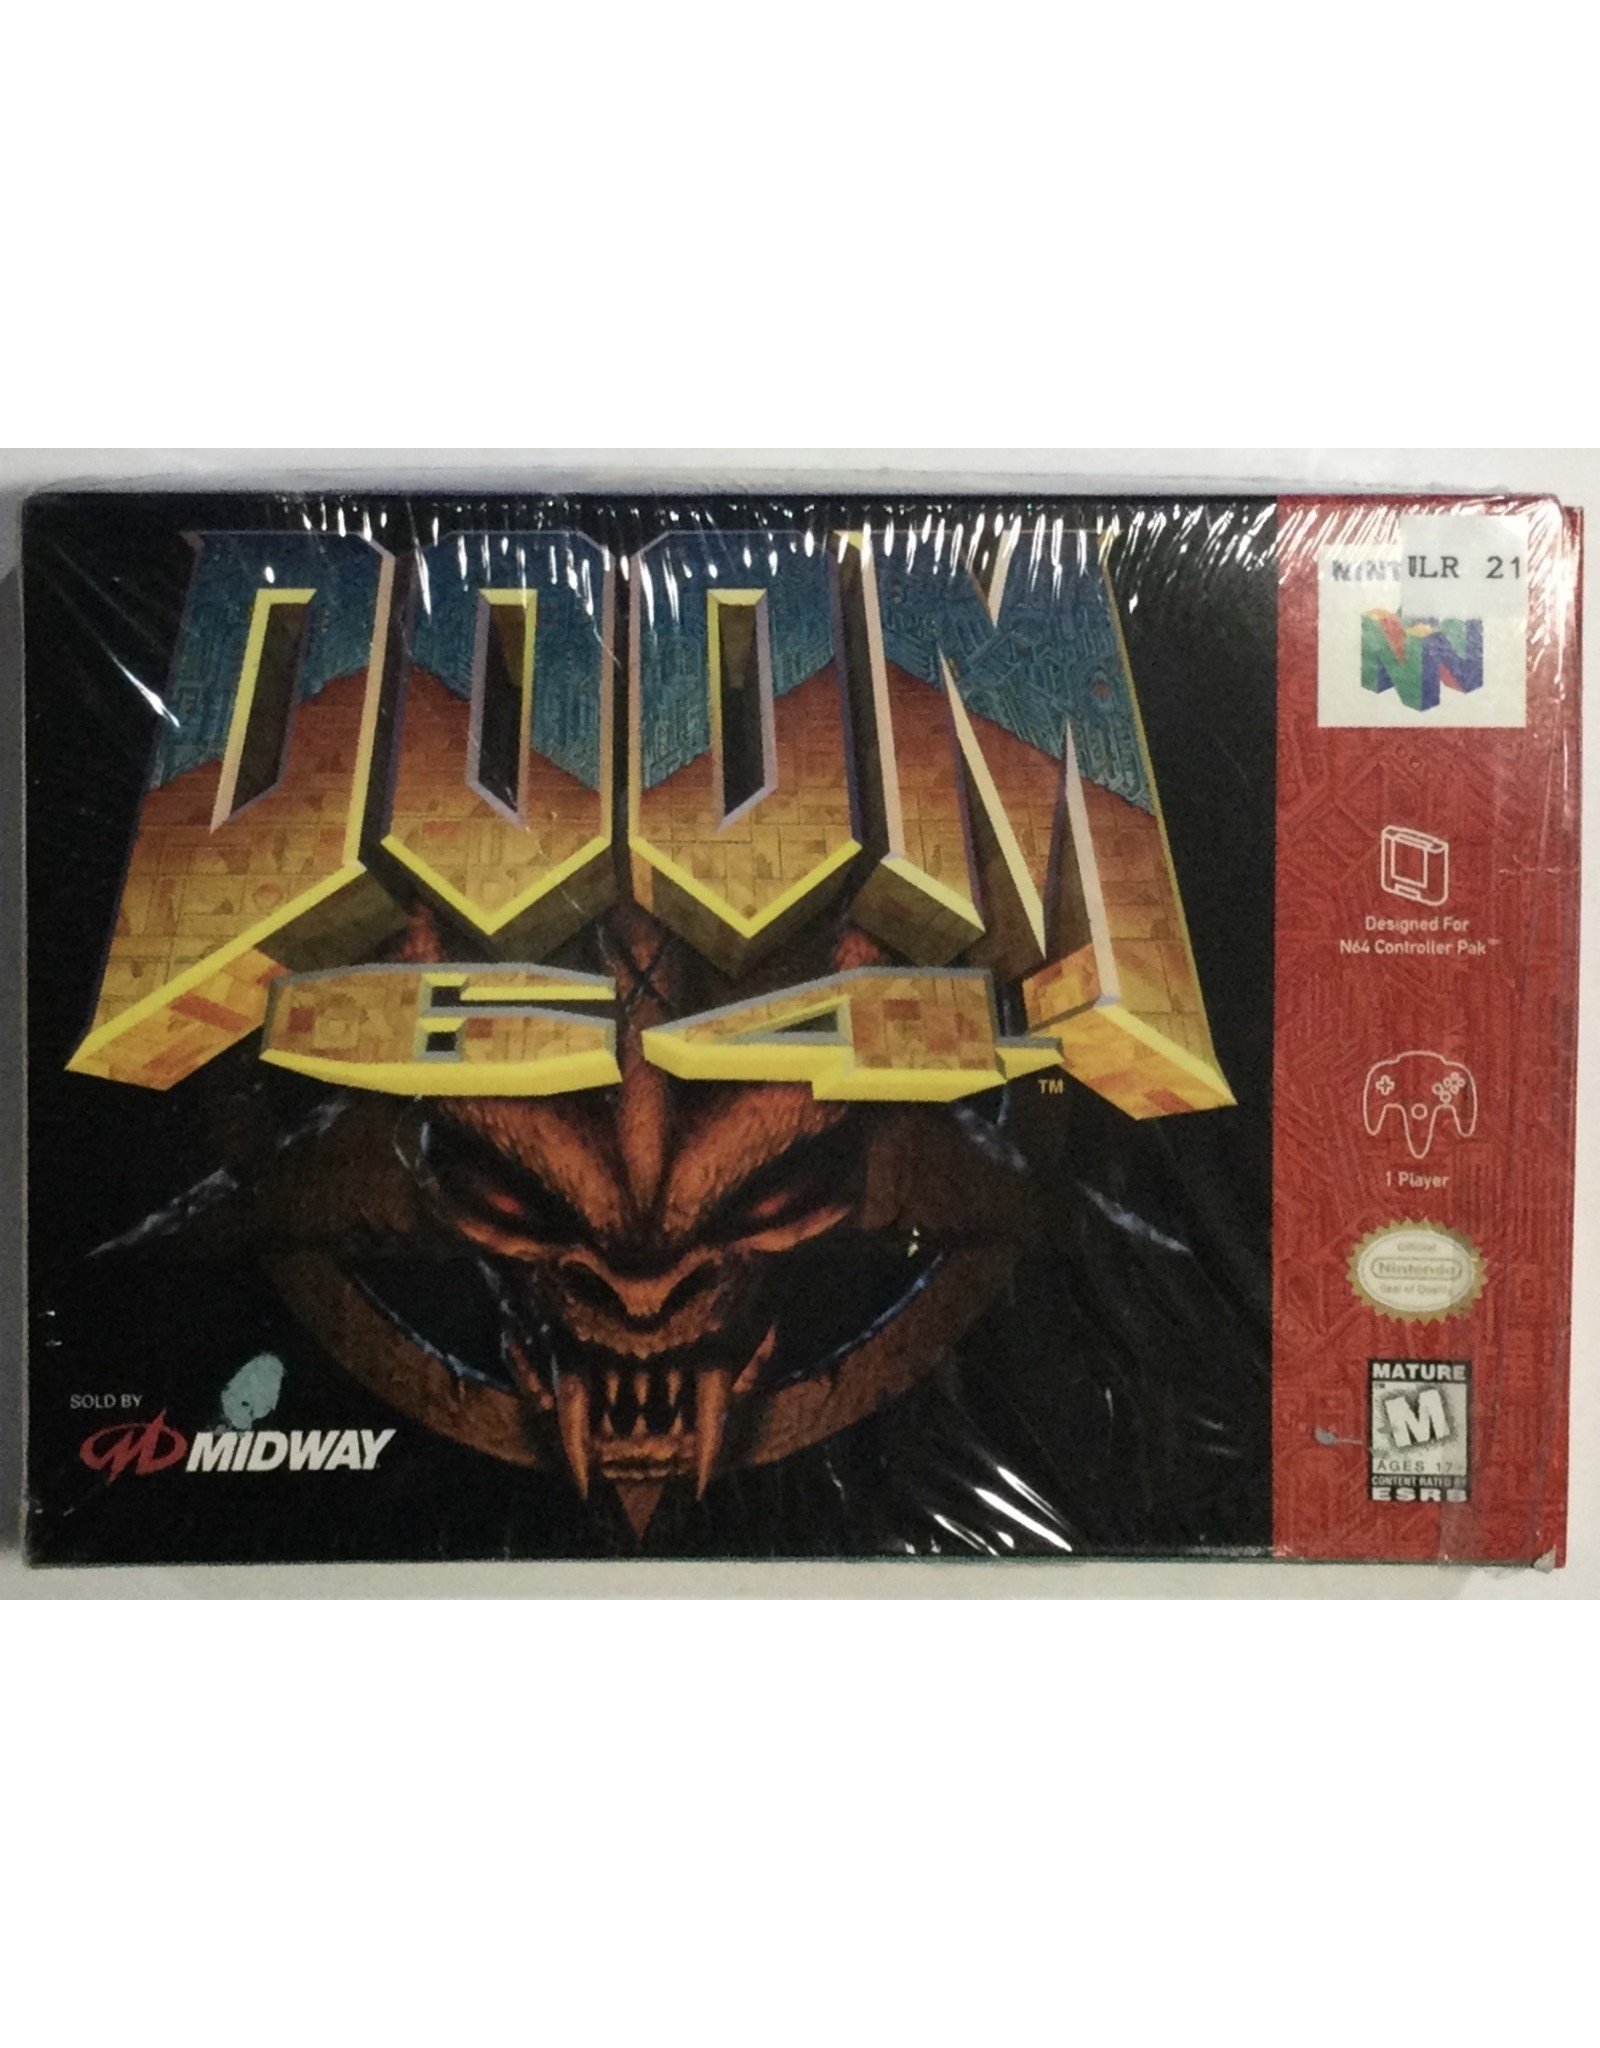 MIDWAY Doom 64 for Nintendo (N64) - CIB